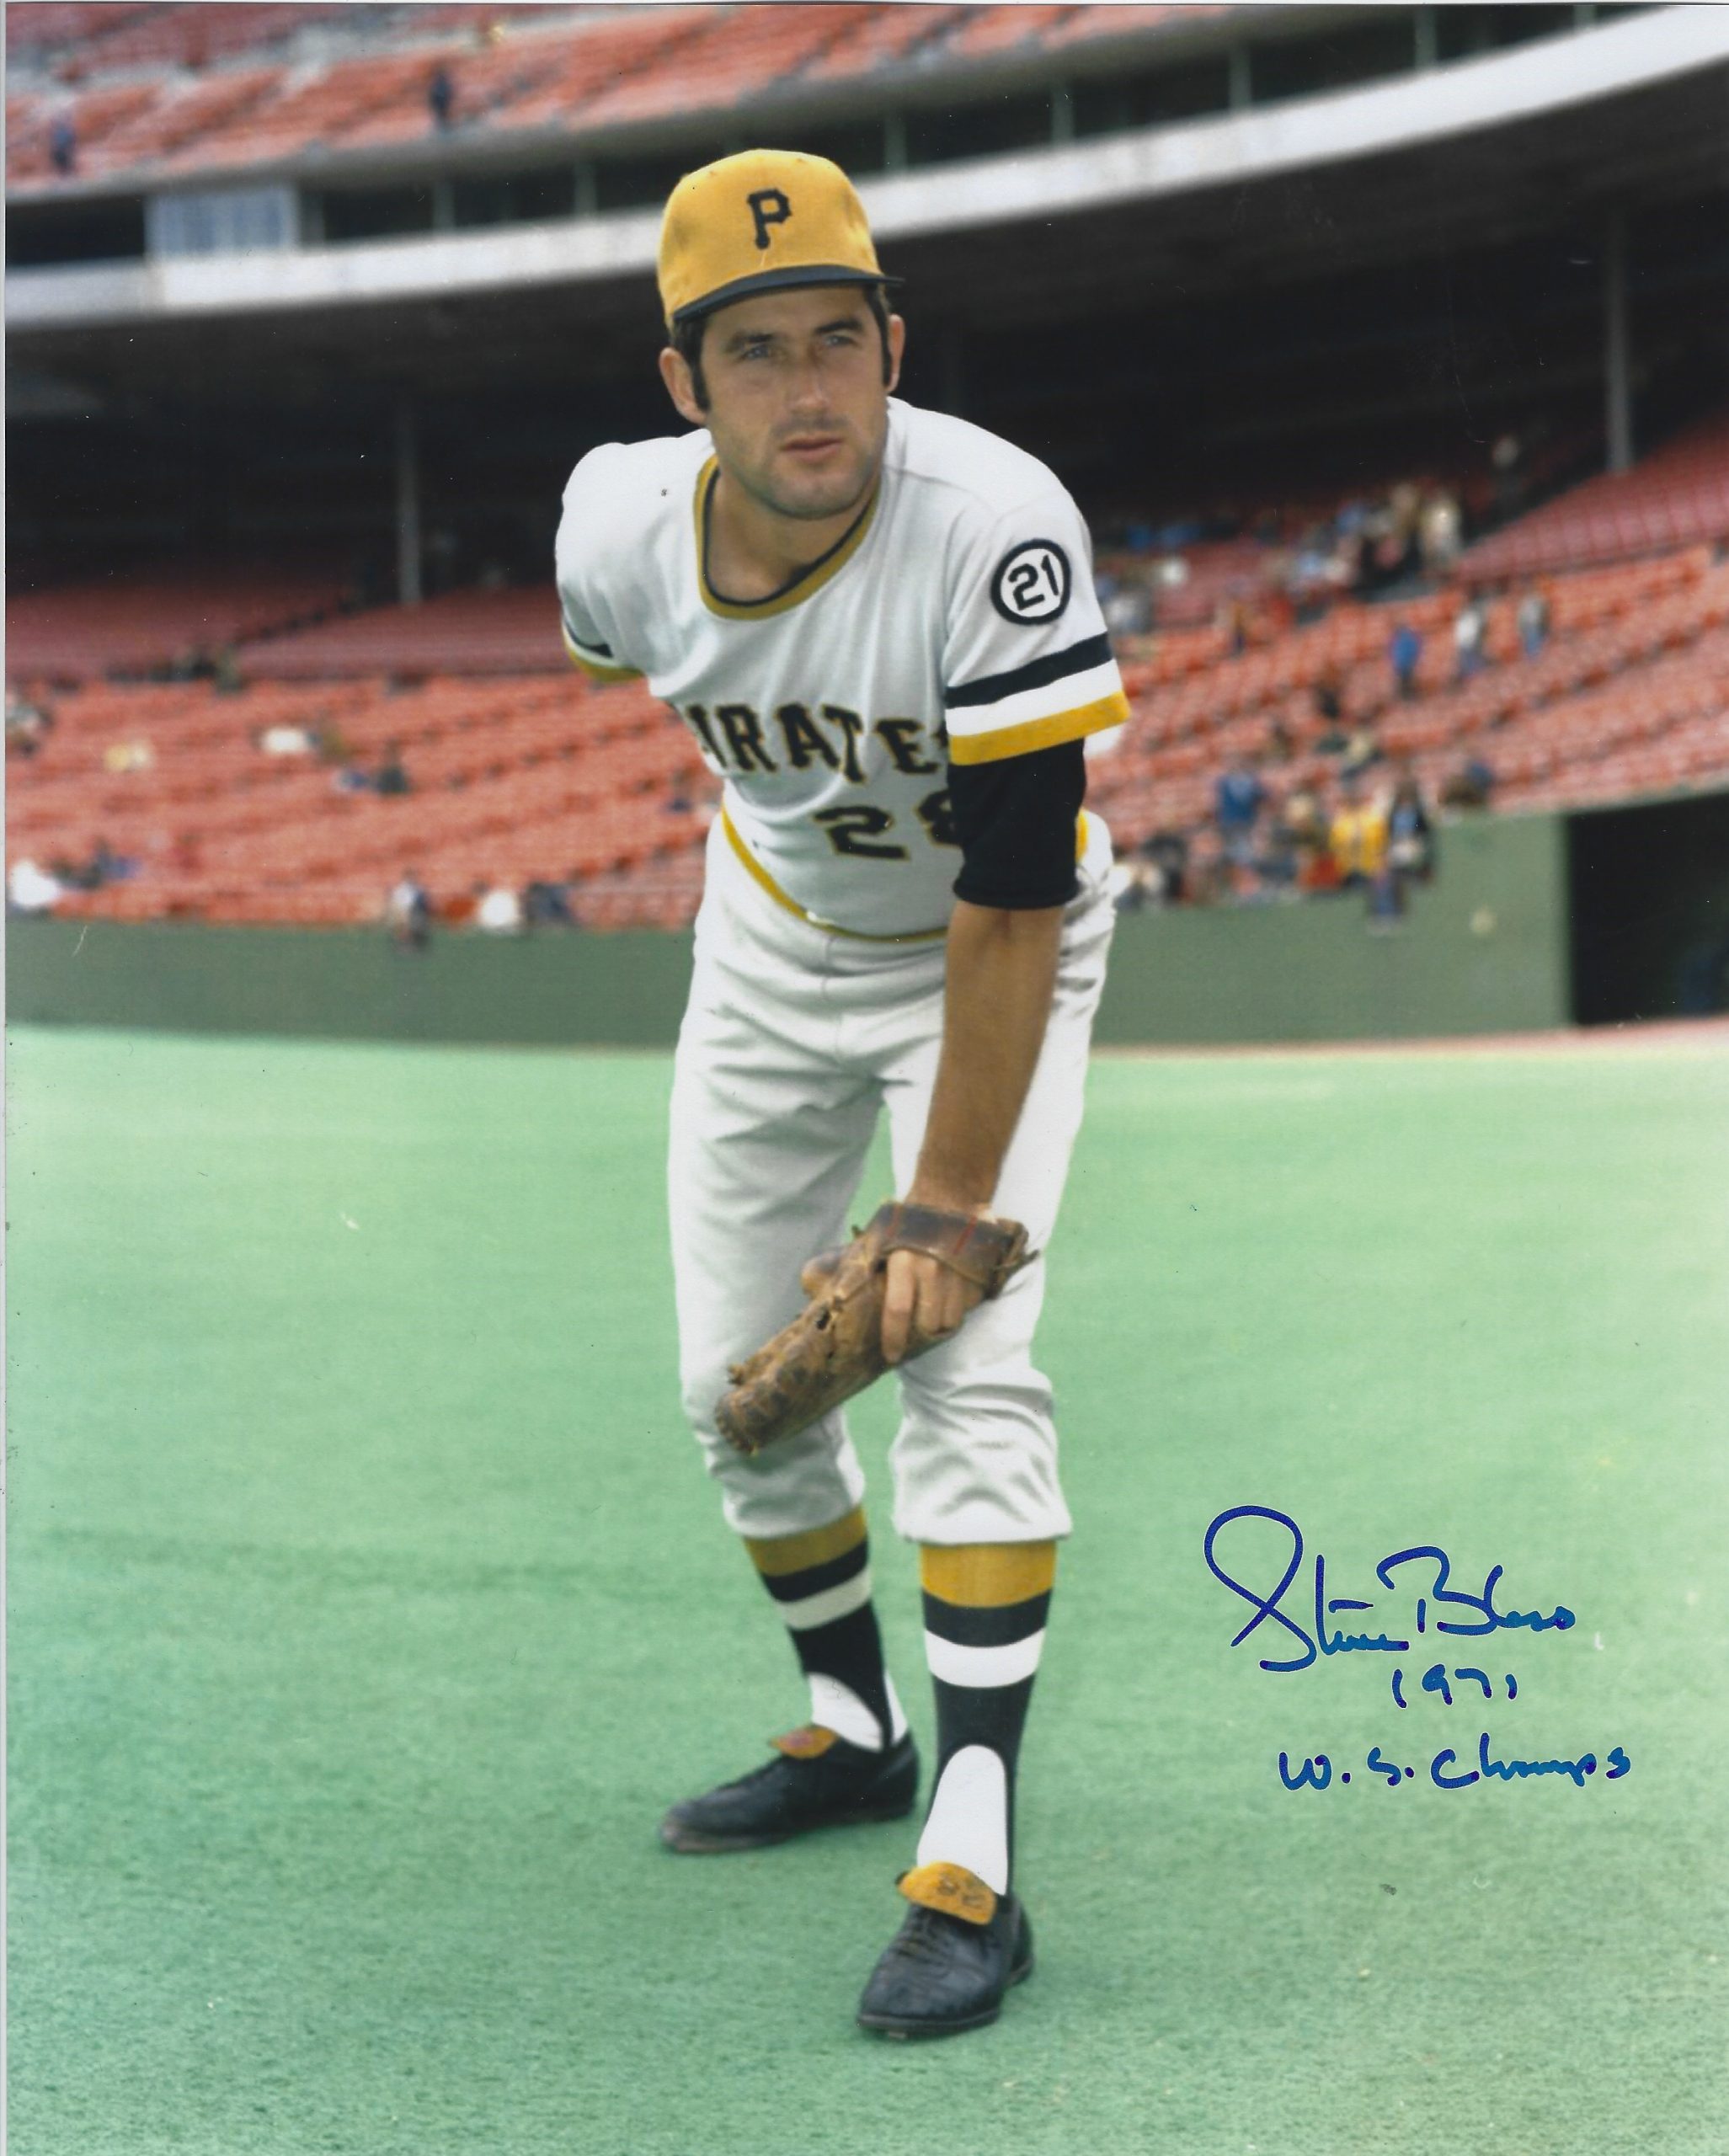 AUTOGRAPHED STEVE BLASS 1971 WS Champs 8x10 Pittsburgh Pirates Photo -  Main Line Autographs